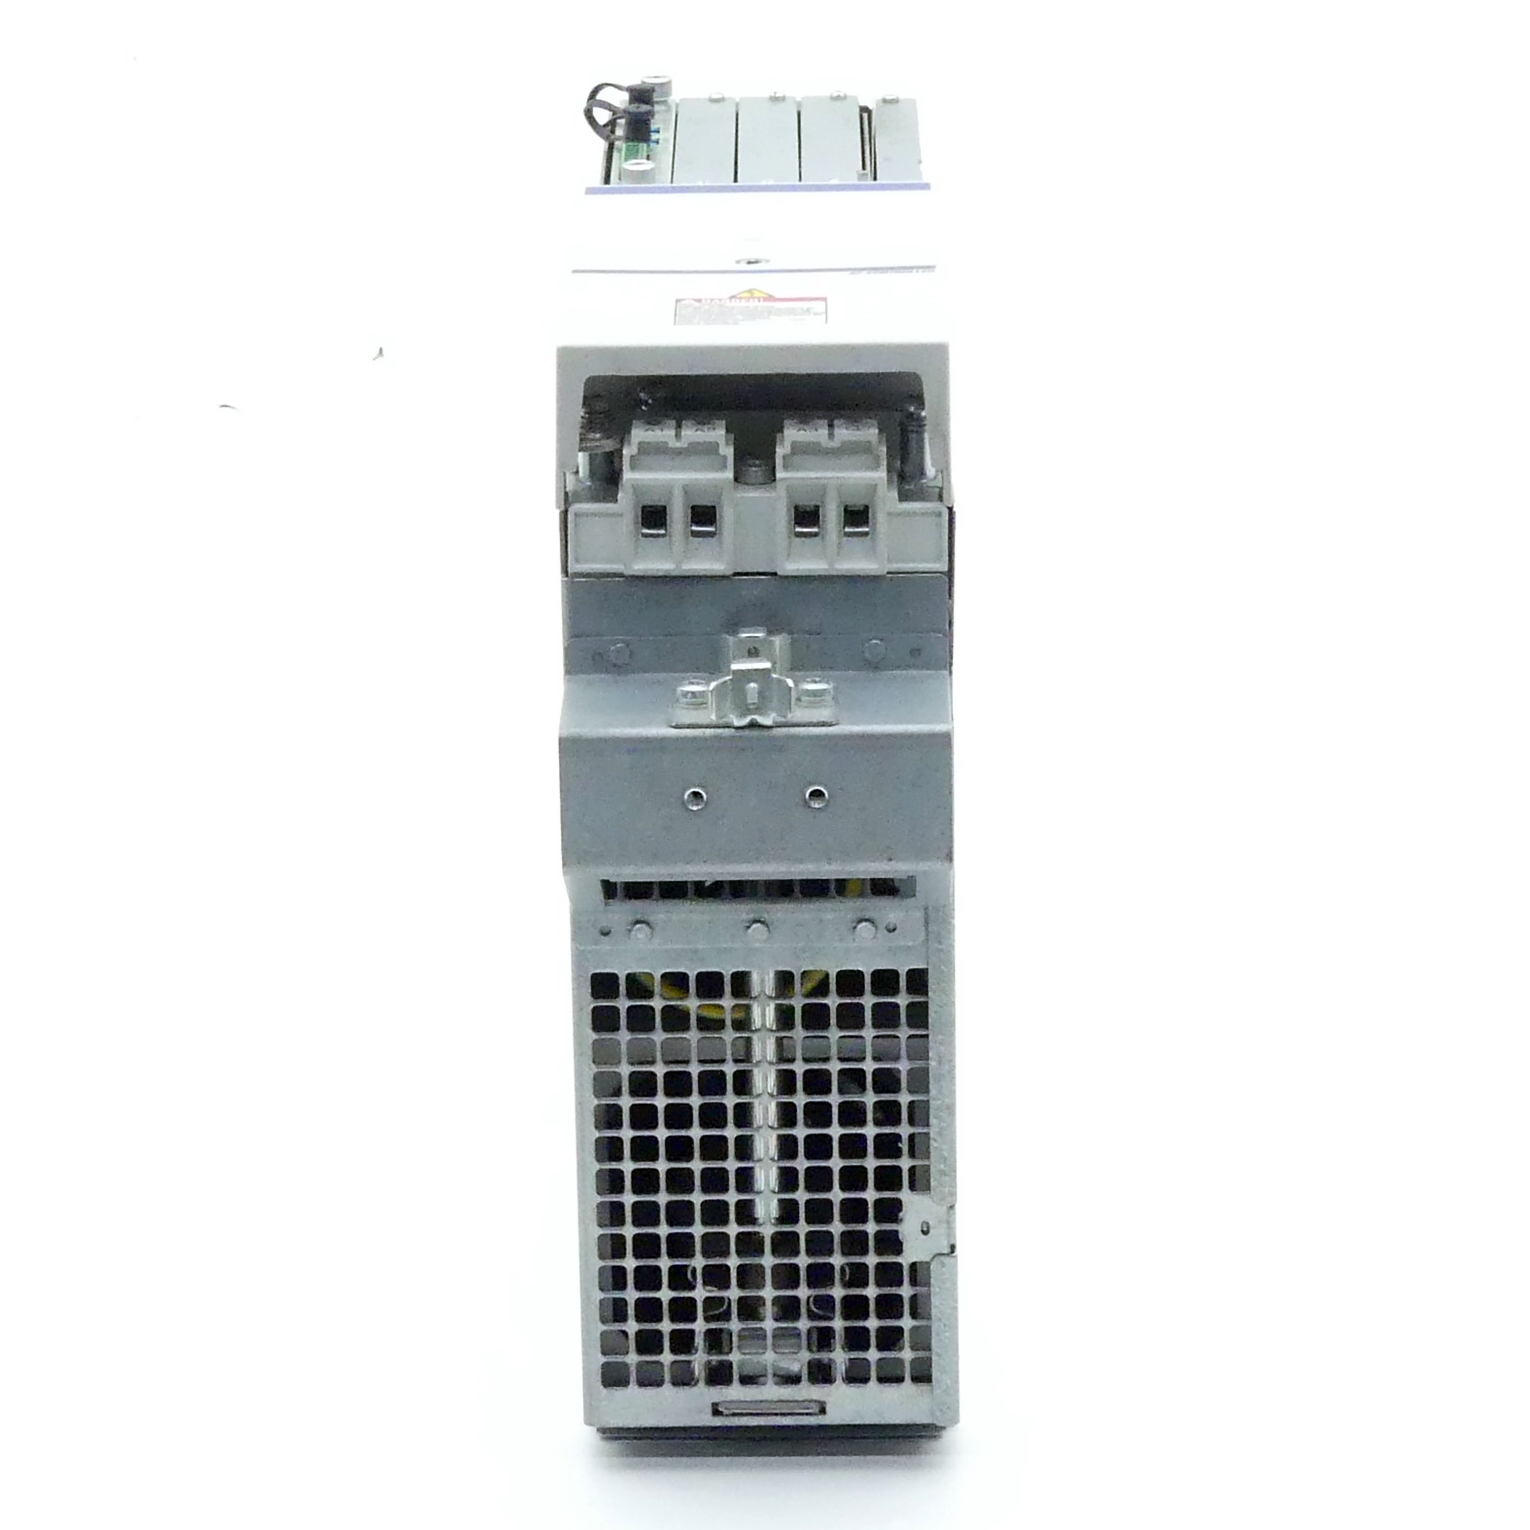 AC-Controller HDS03.2-W100N-HS12-0 